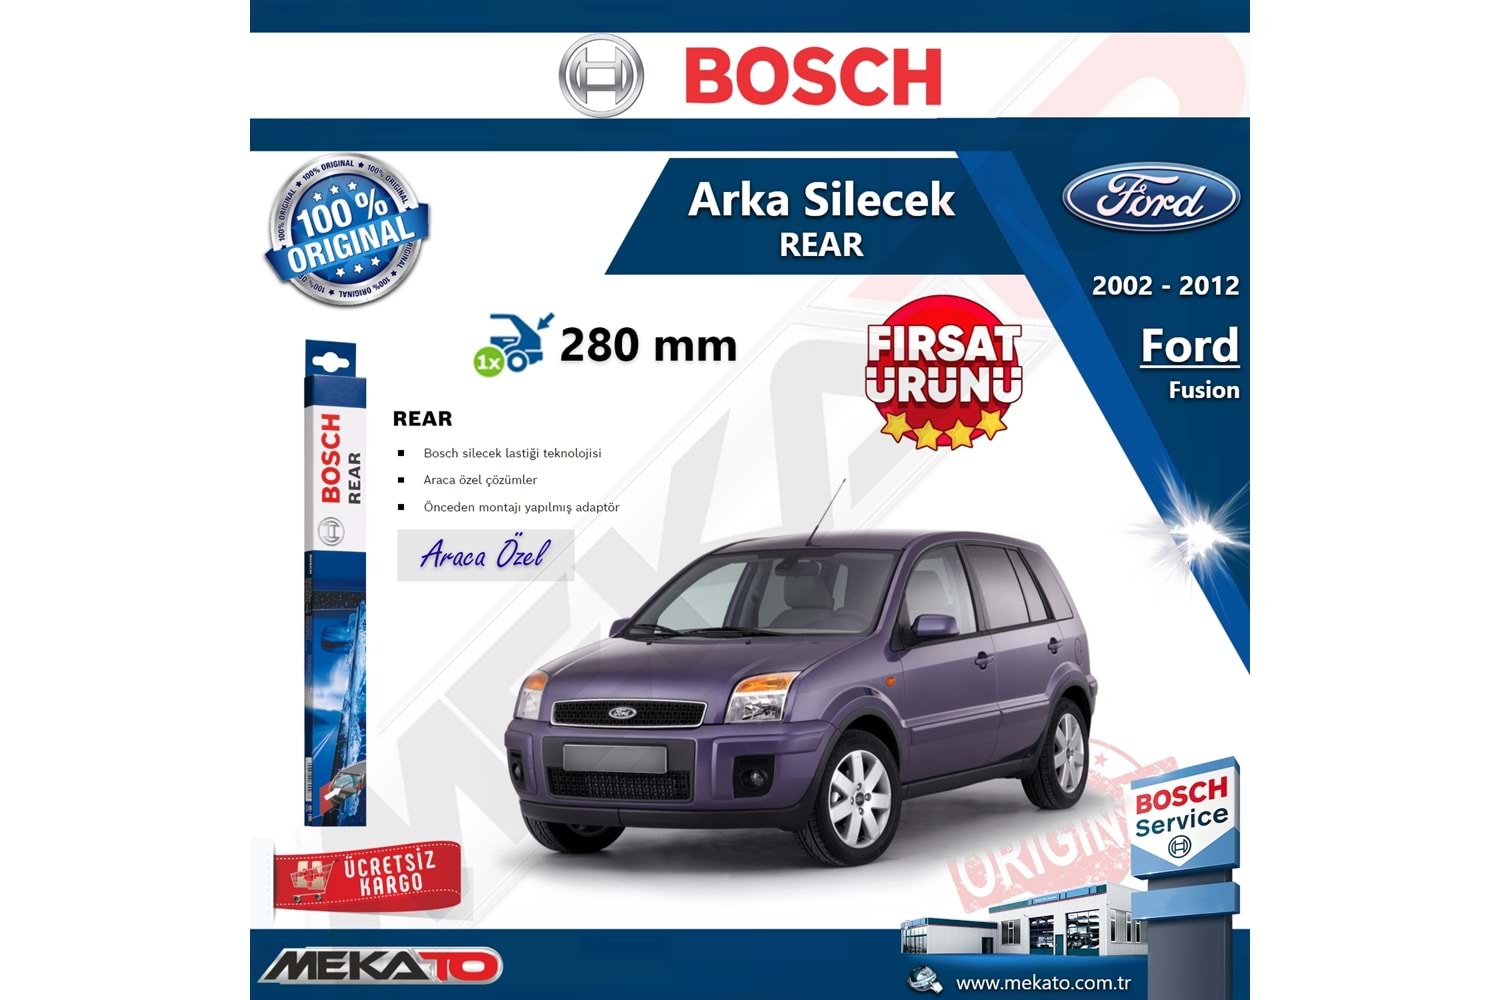 Ford Fusion Arka Silecek Bosch Rear 2002-2012